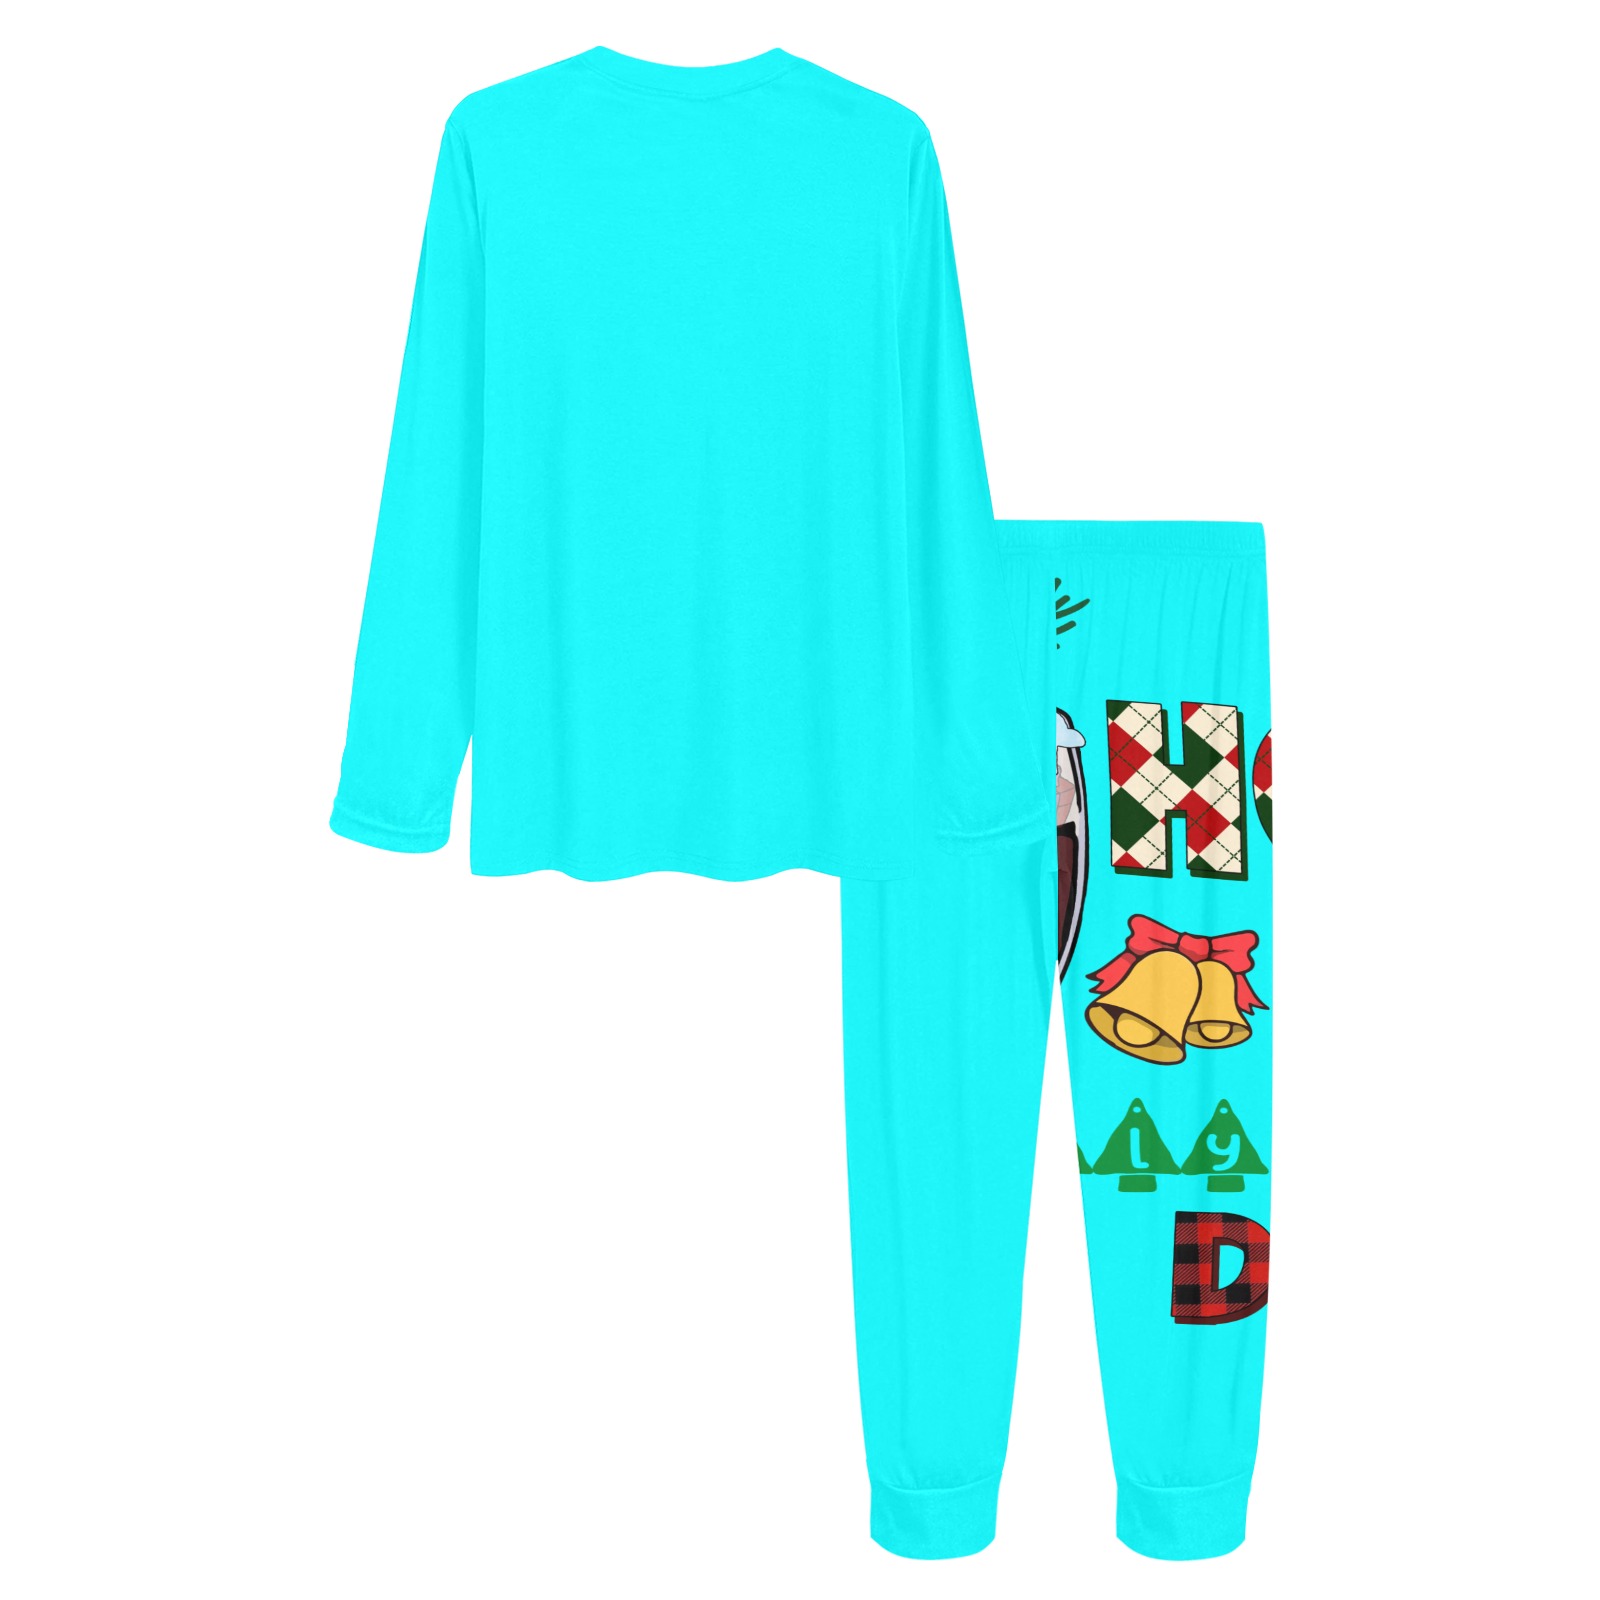 Ho Ho Holy Sheet I'm Drunk (LB) Women's All Over Print Pajama Set